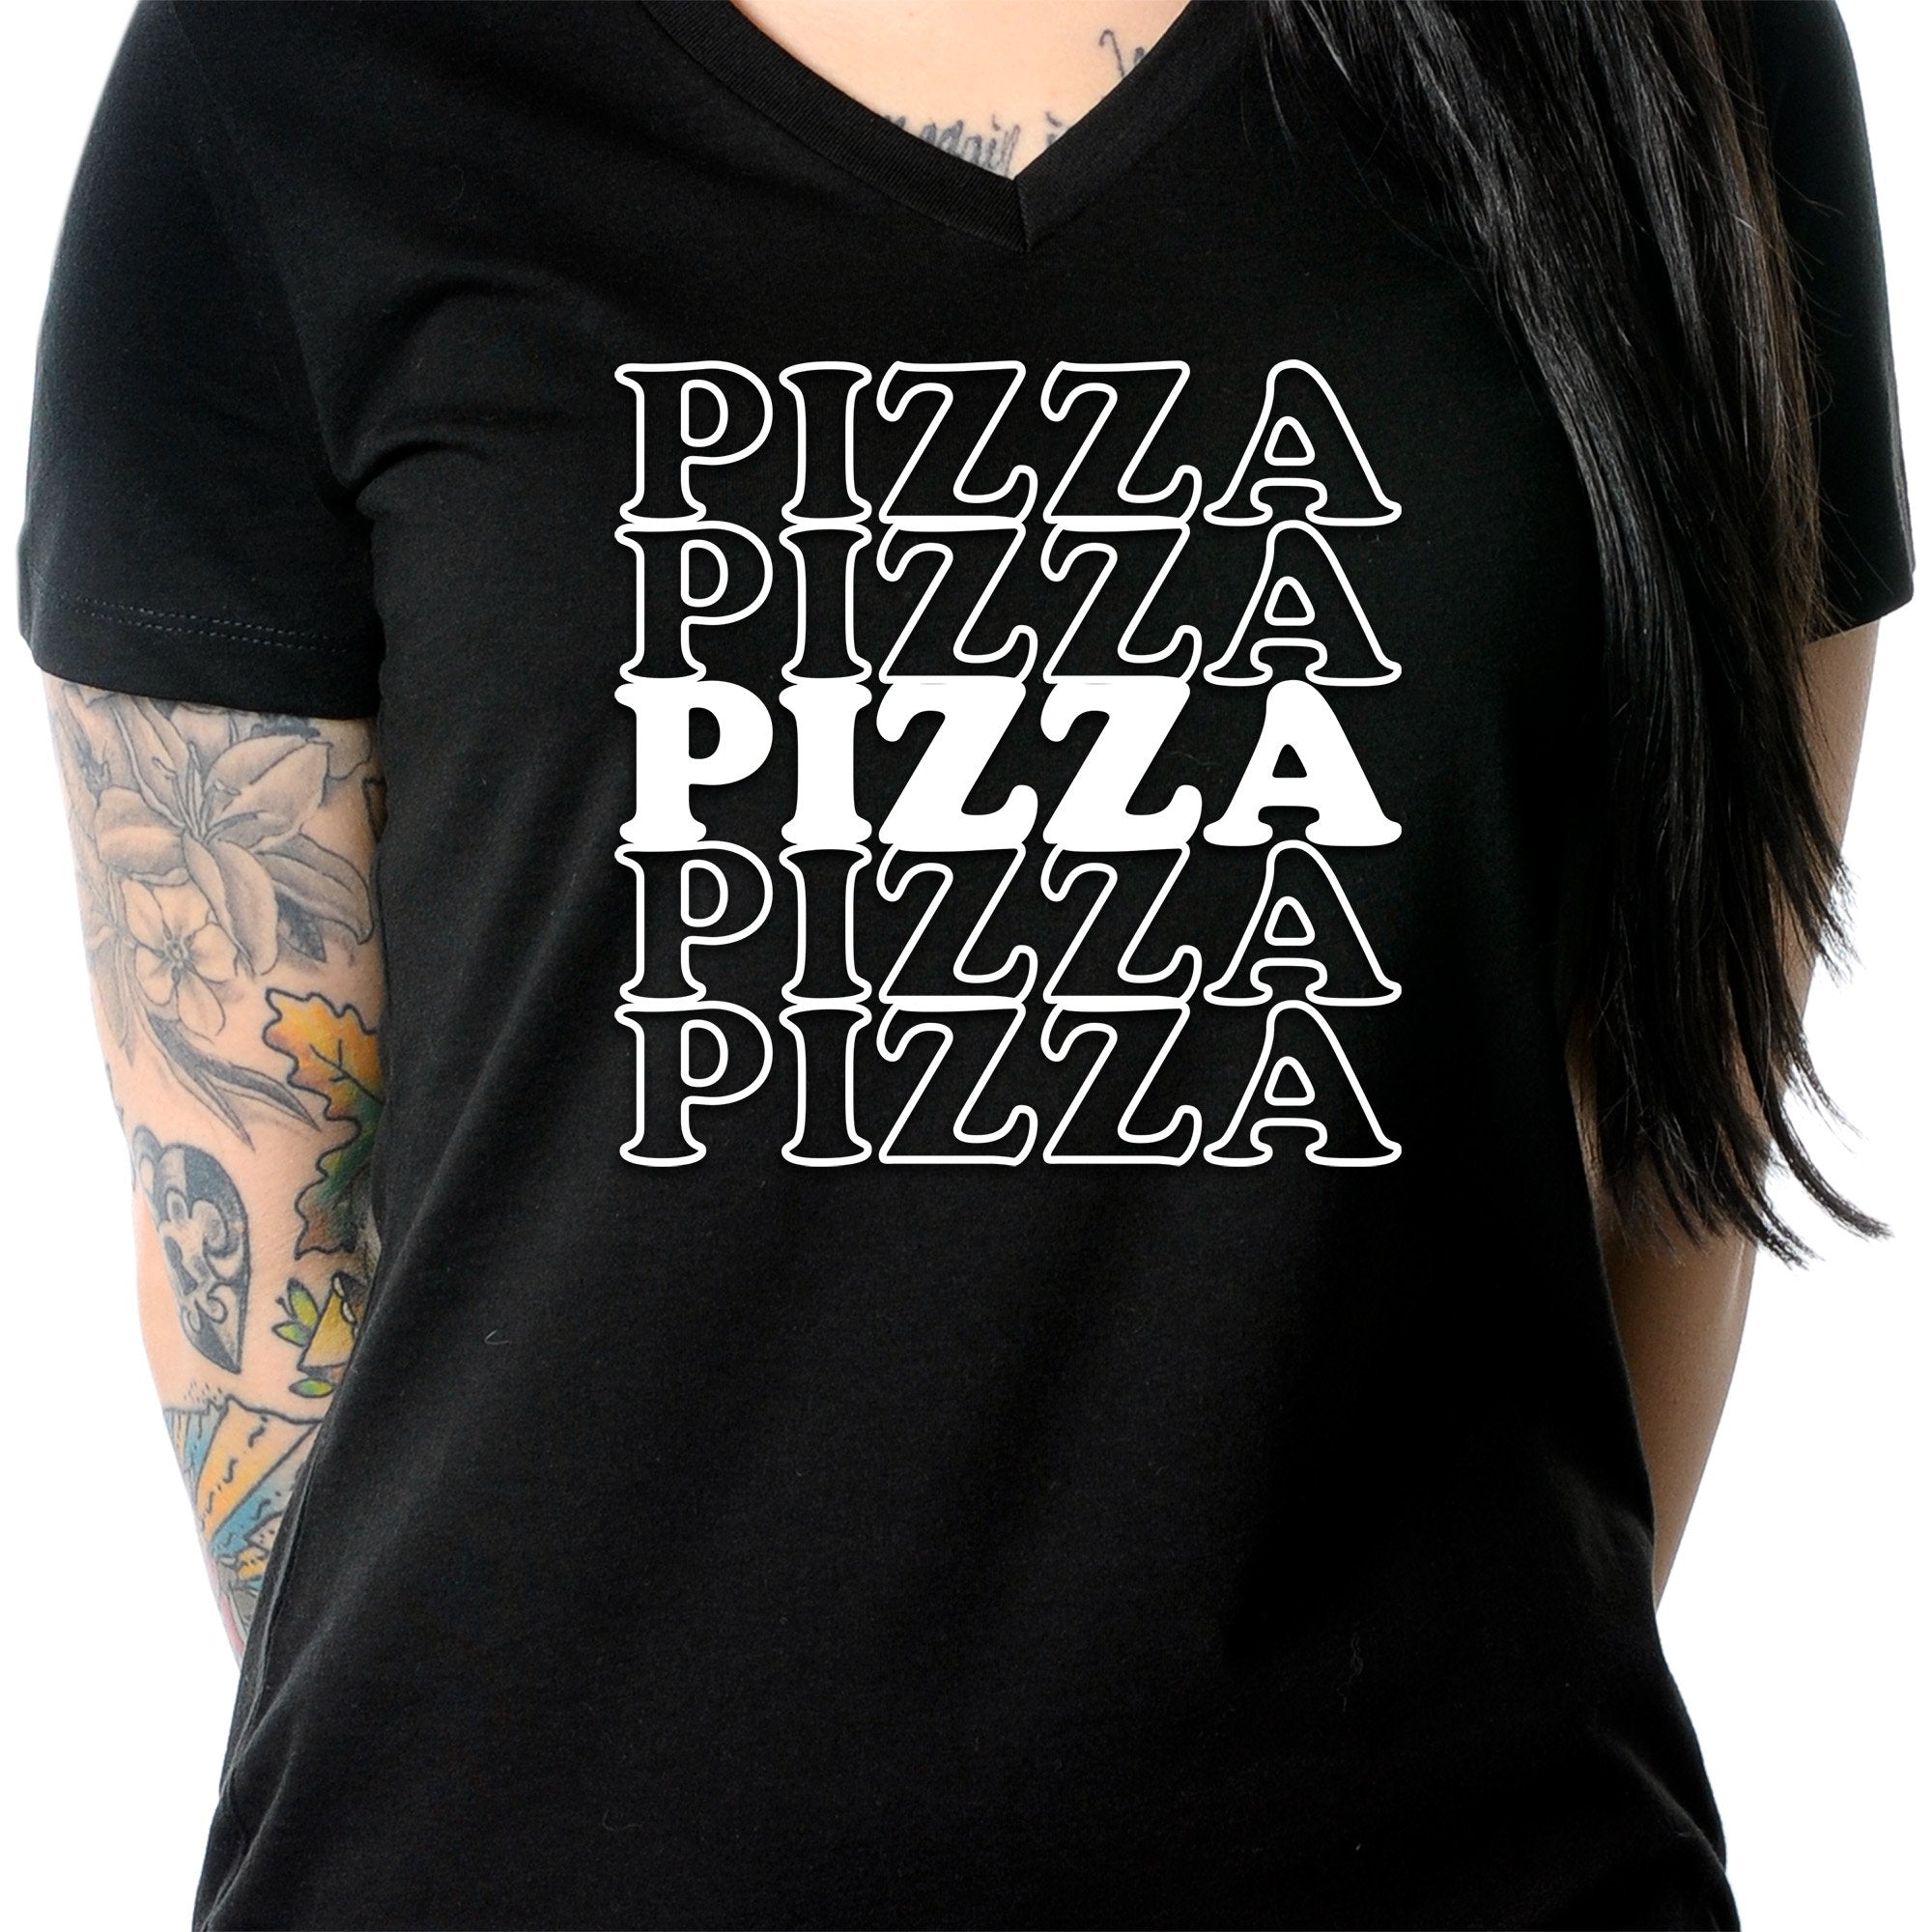 Pizza Pizza Pizza Pizza Pizza Tapered V-Neck Tee Shirt